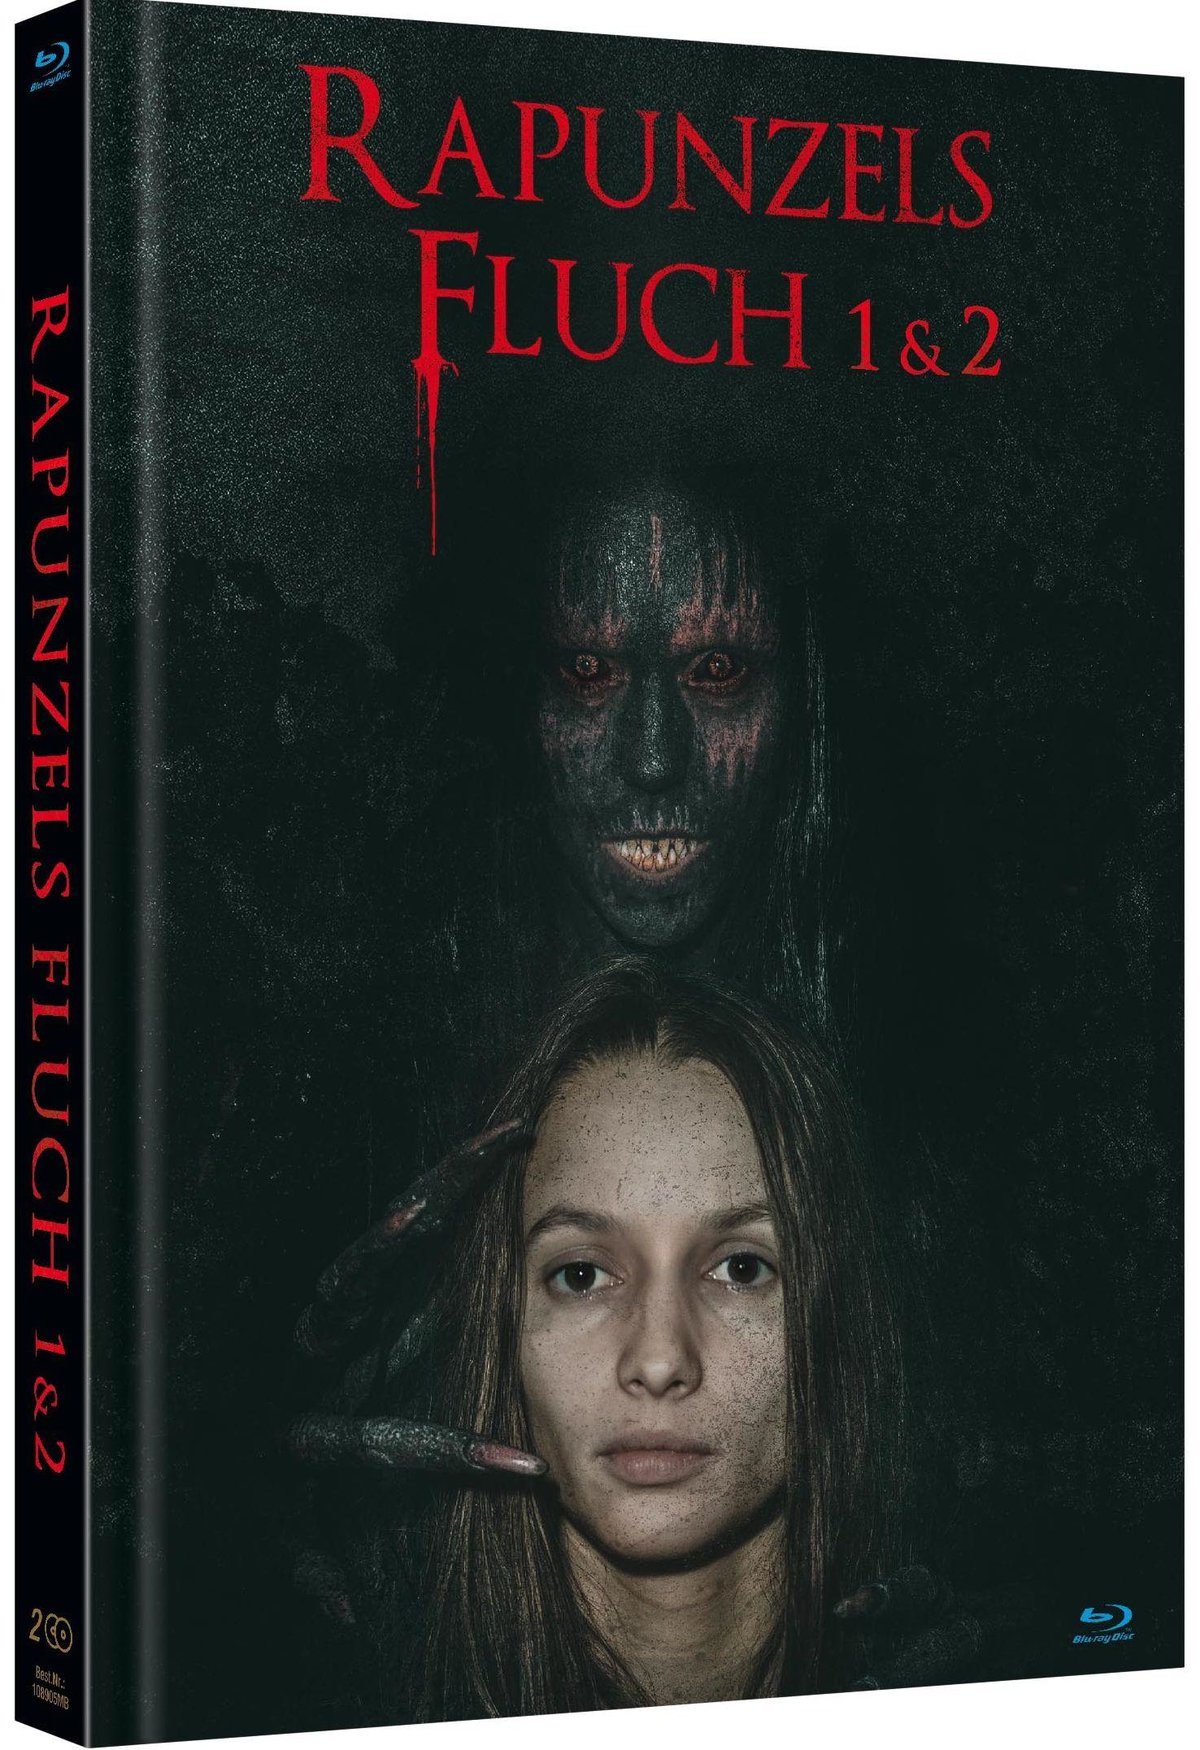 Rapunzels Fluch 1+2 - Uncut Mediabook Edition (DVD+blu-ray) (A)